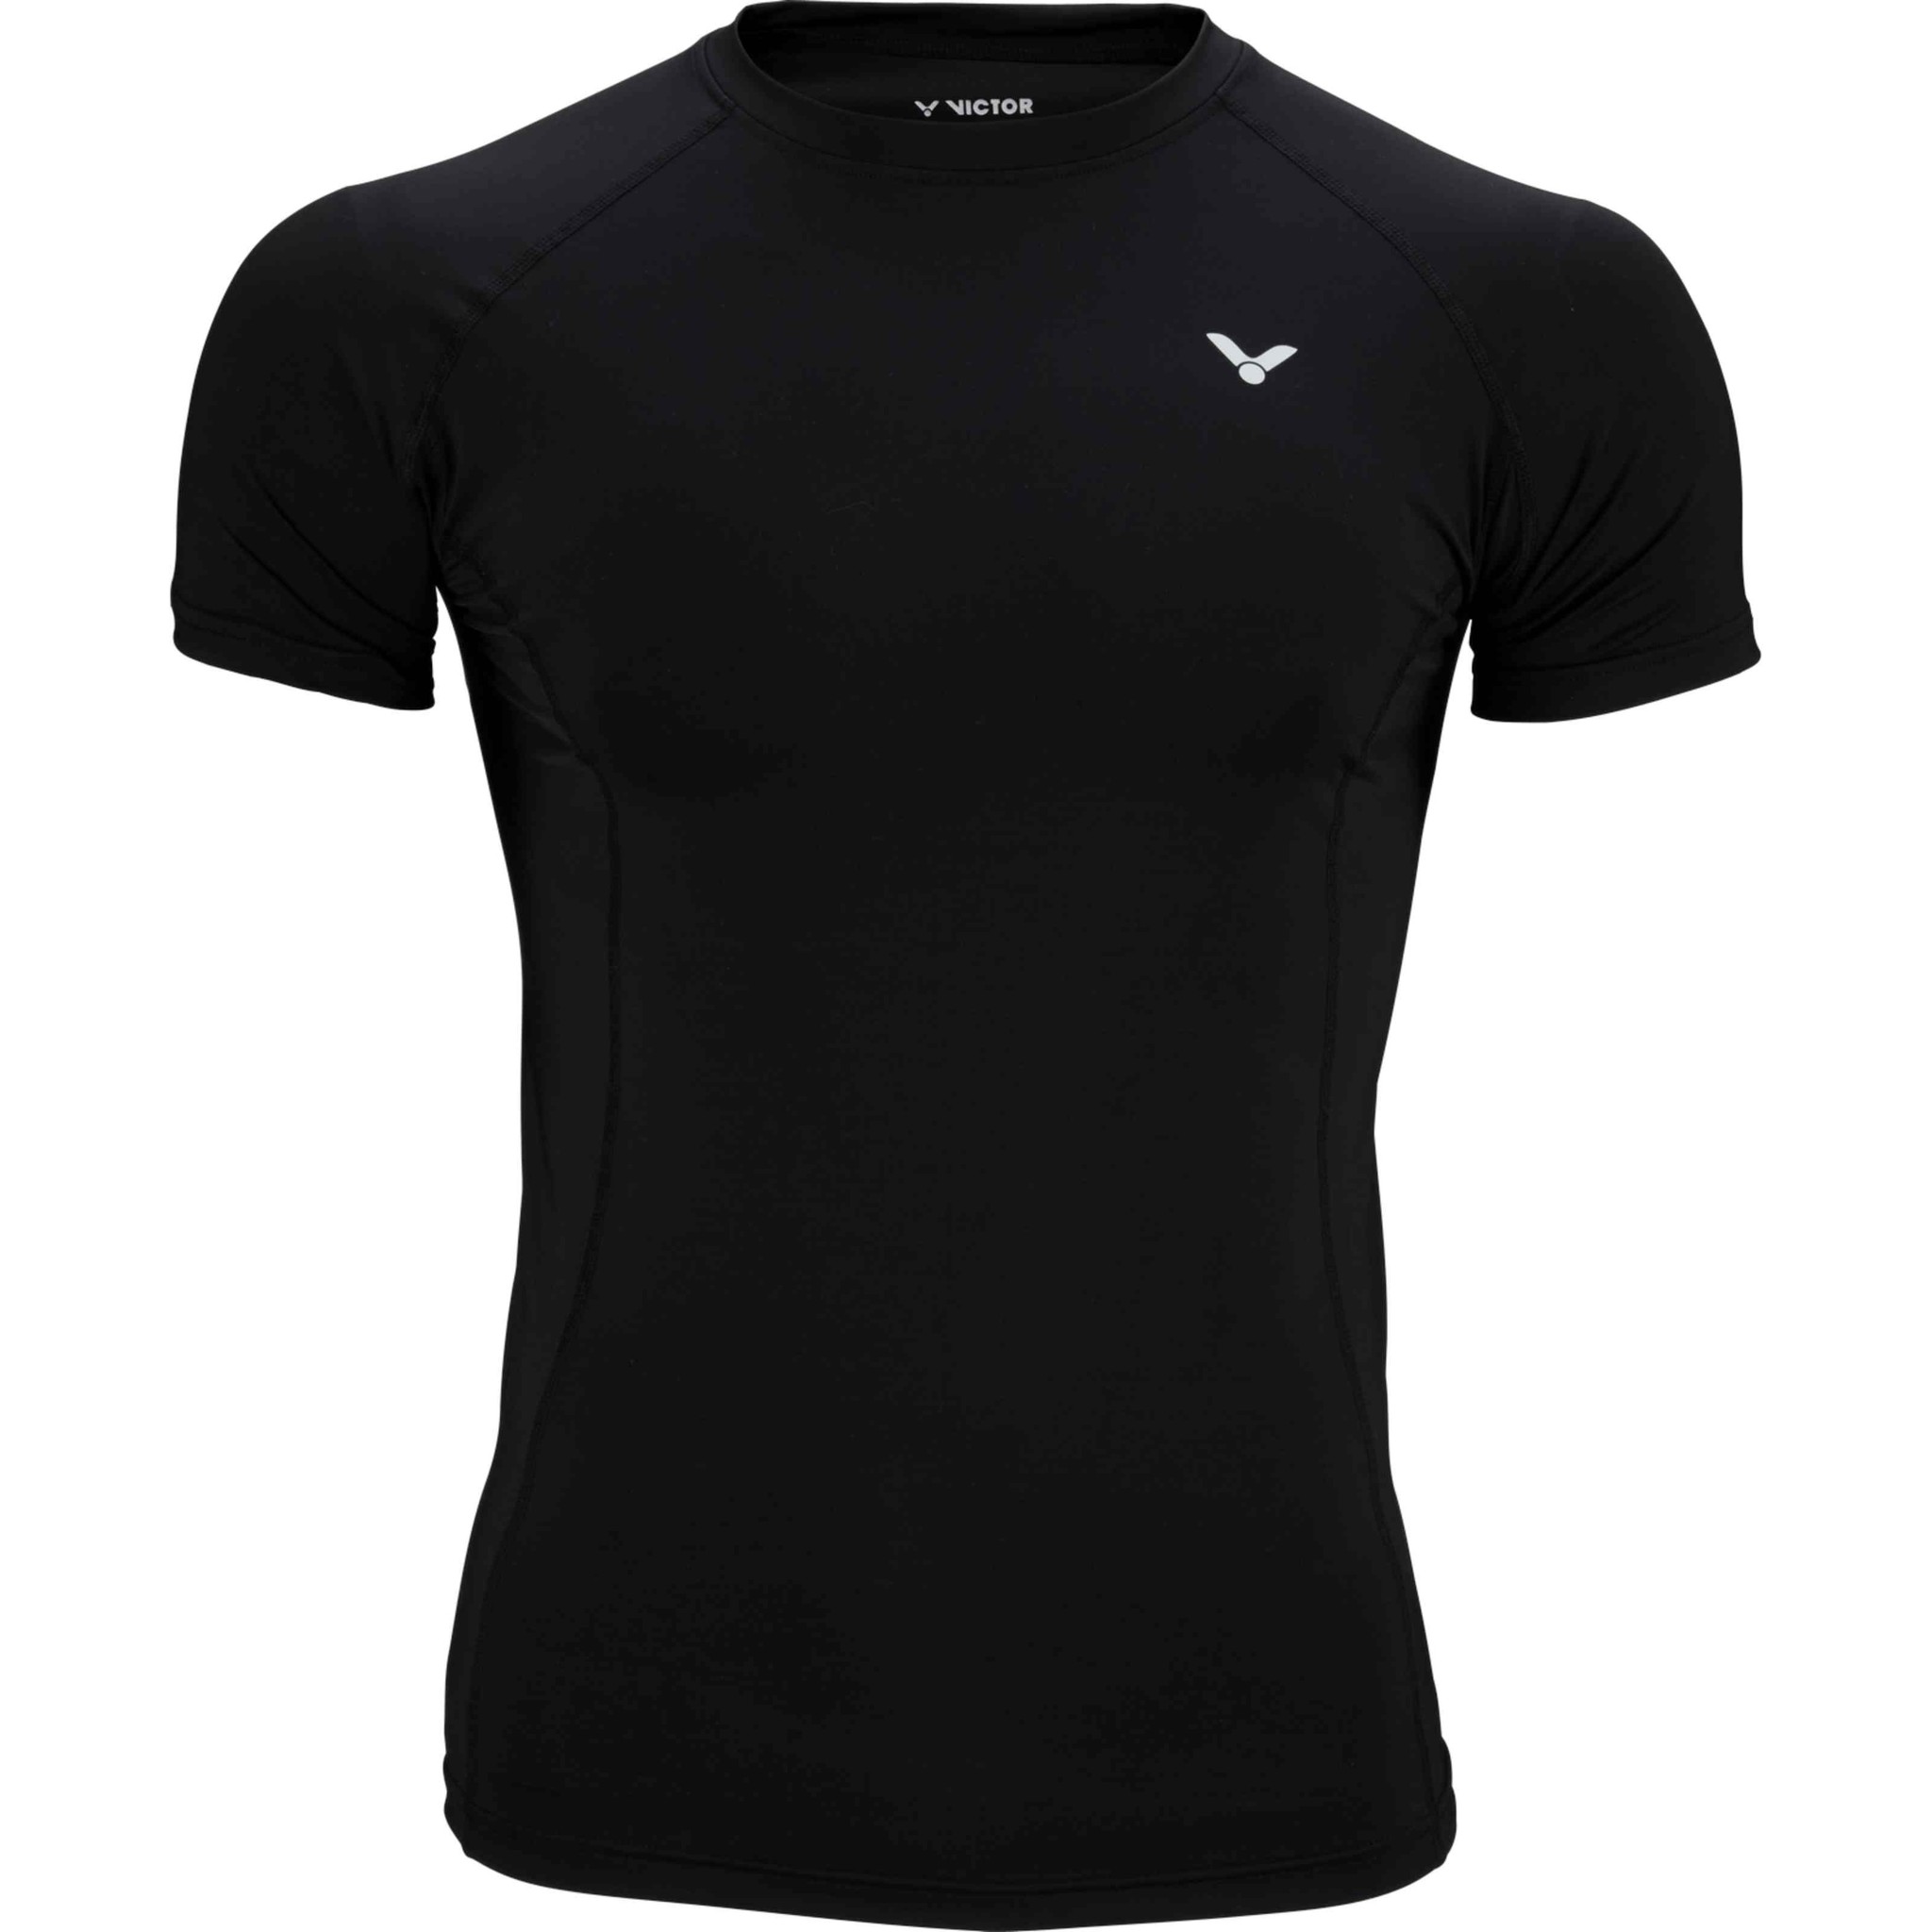 Victor Compression shirt uni black 5708